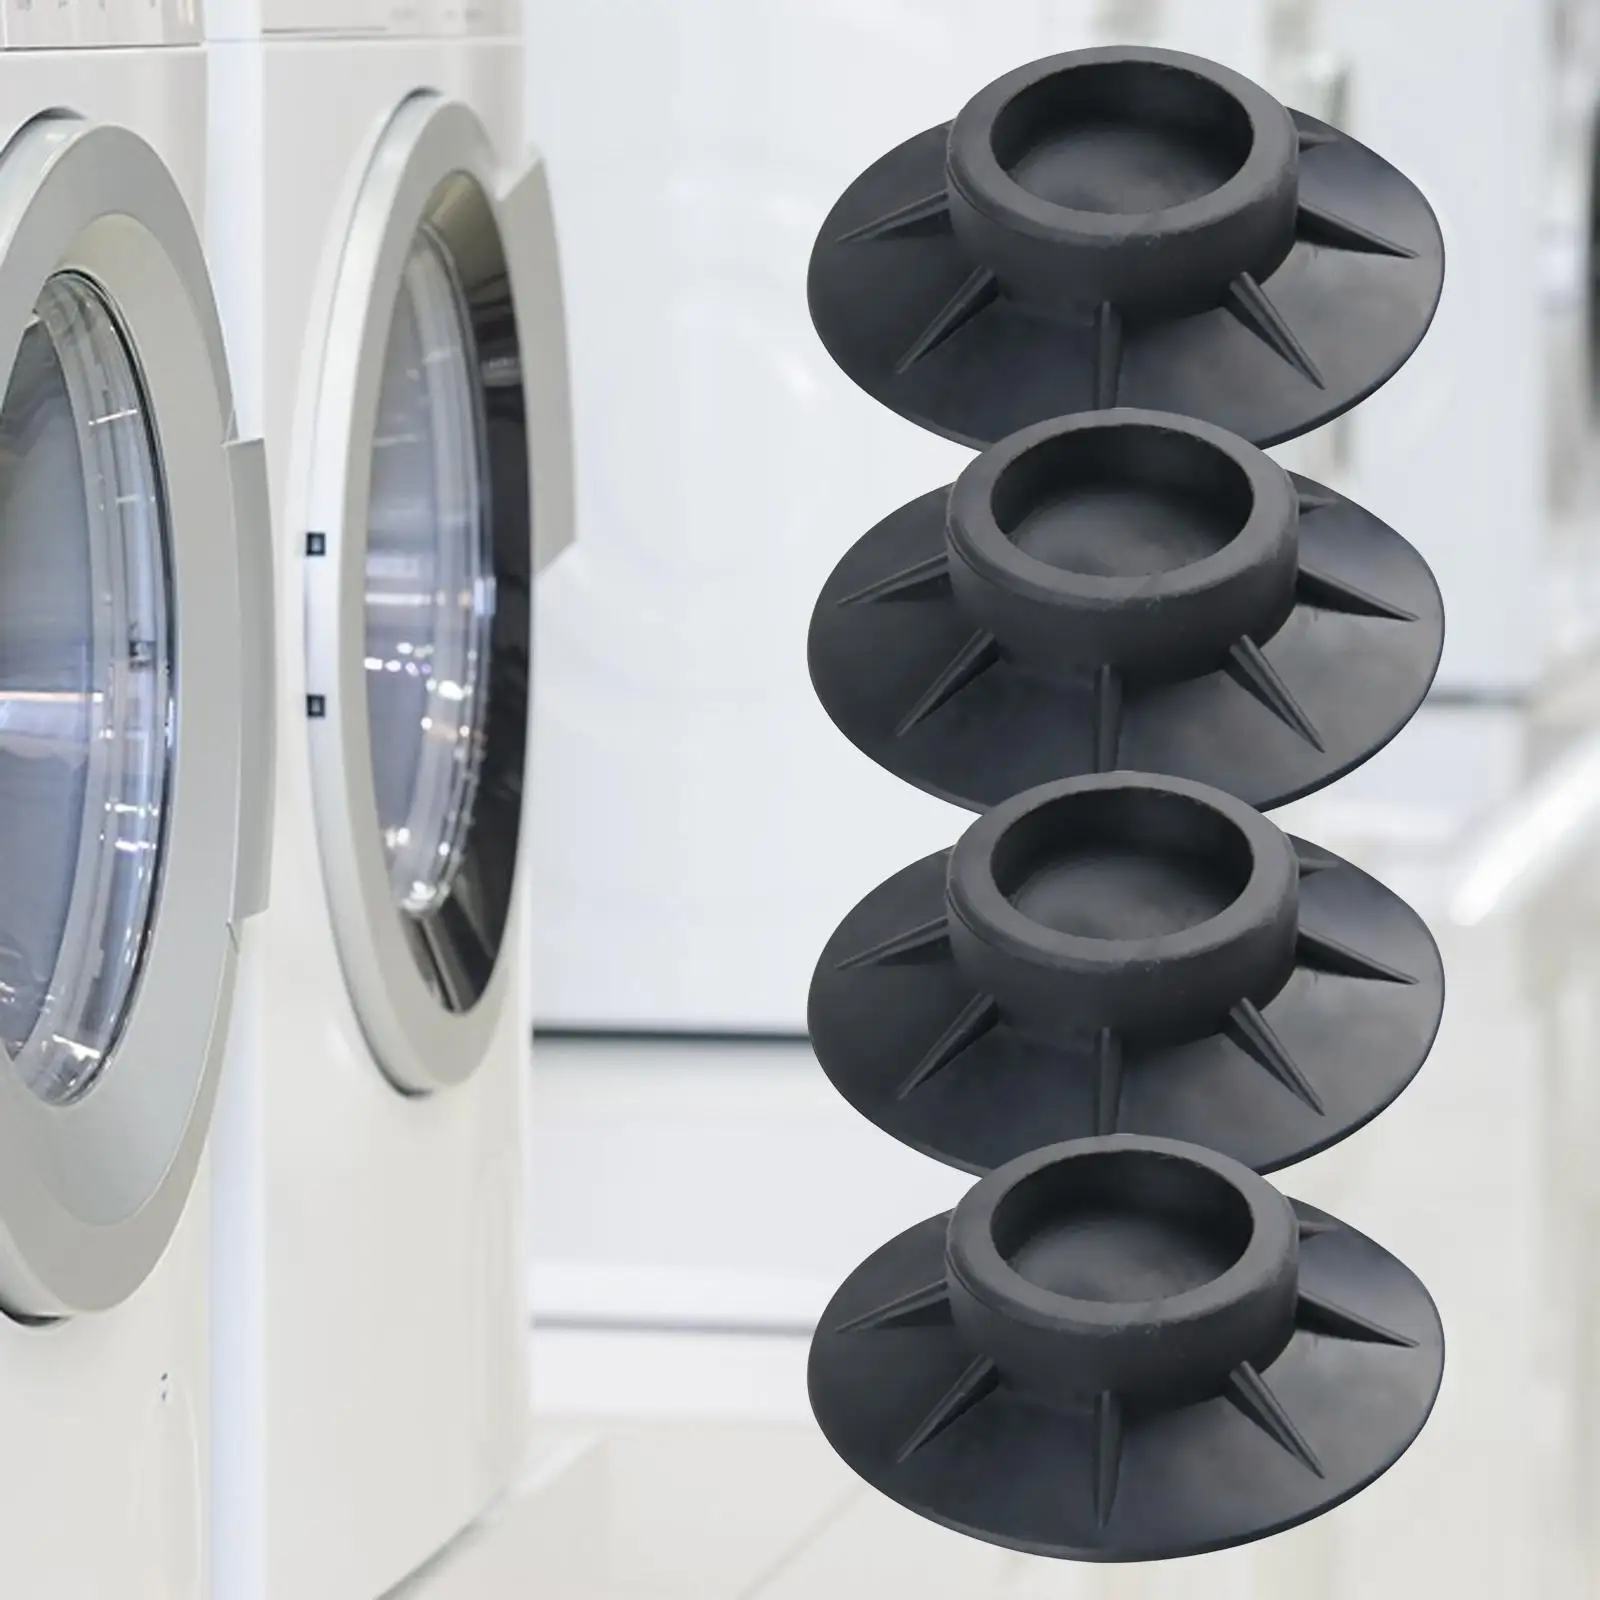 Anitivibration Pad Slipstops Noise Dampening Silent Washers for Refrigerator